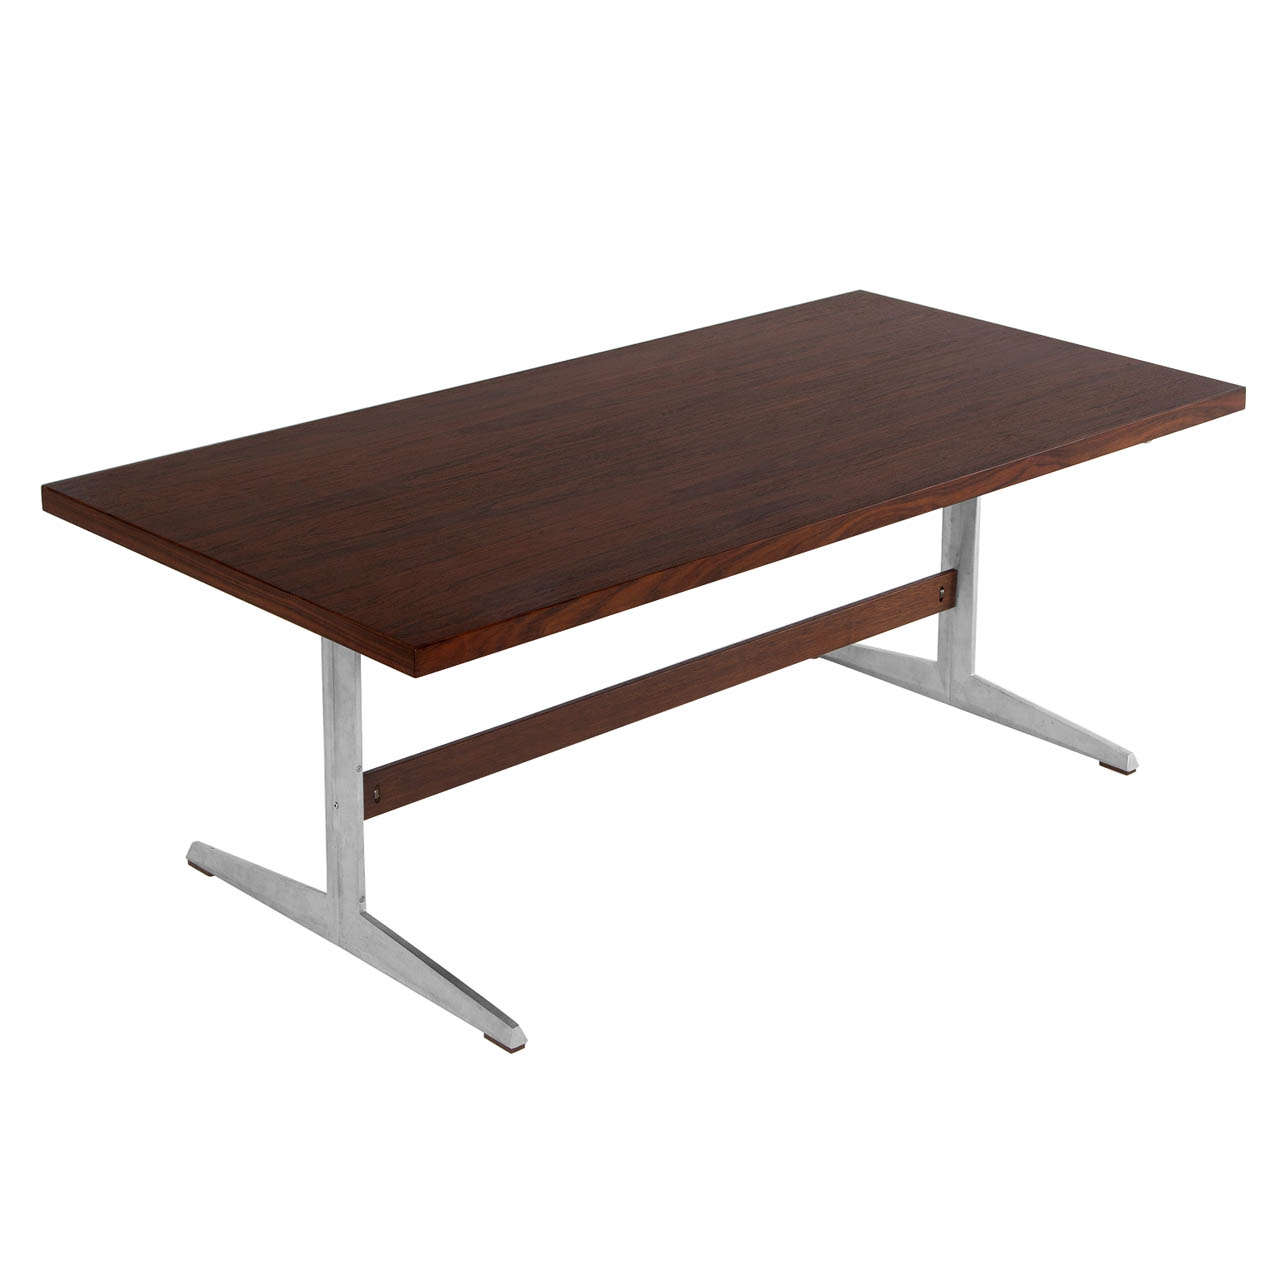 Danish Rosewood and Aluminum Table